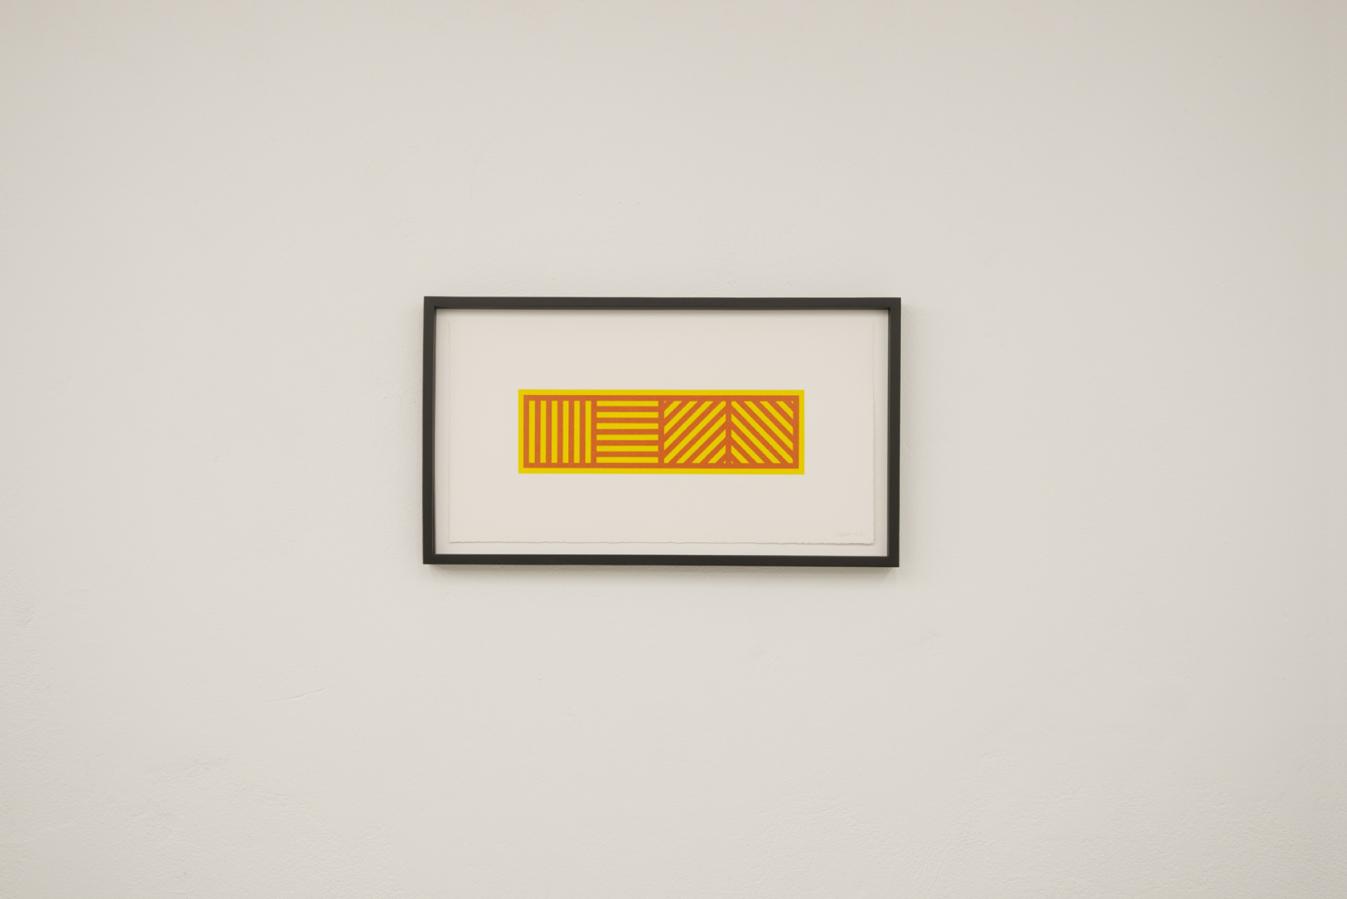 Sol LeWitt, ”Lines in Four Direktions in Color”, linoryt, 25x48 cm. w oprawie 29x52 cm. 2004